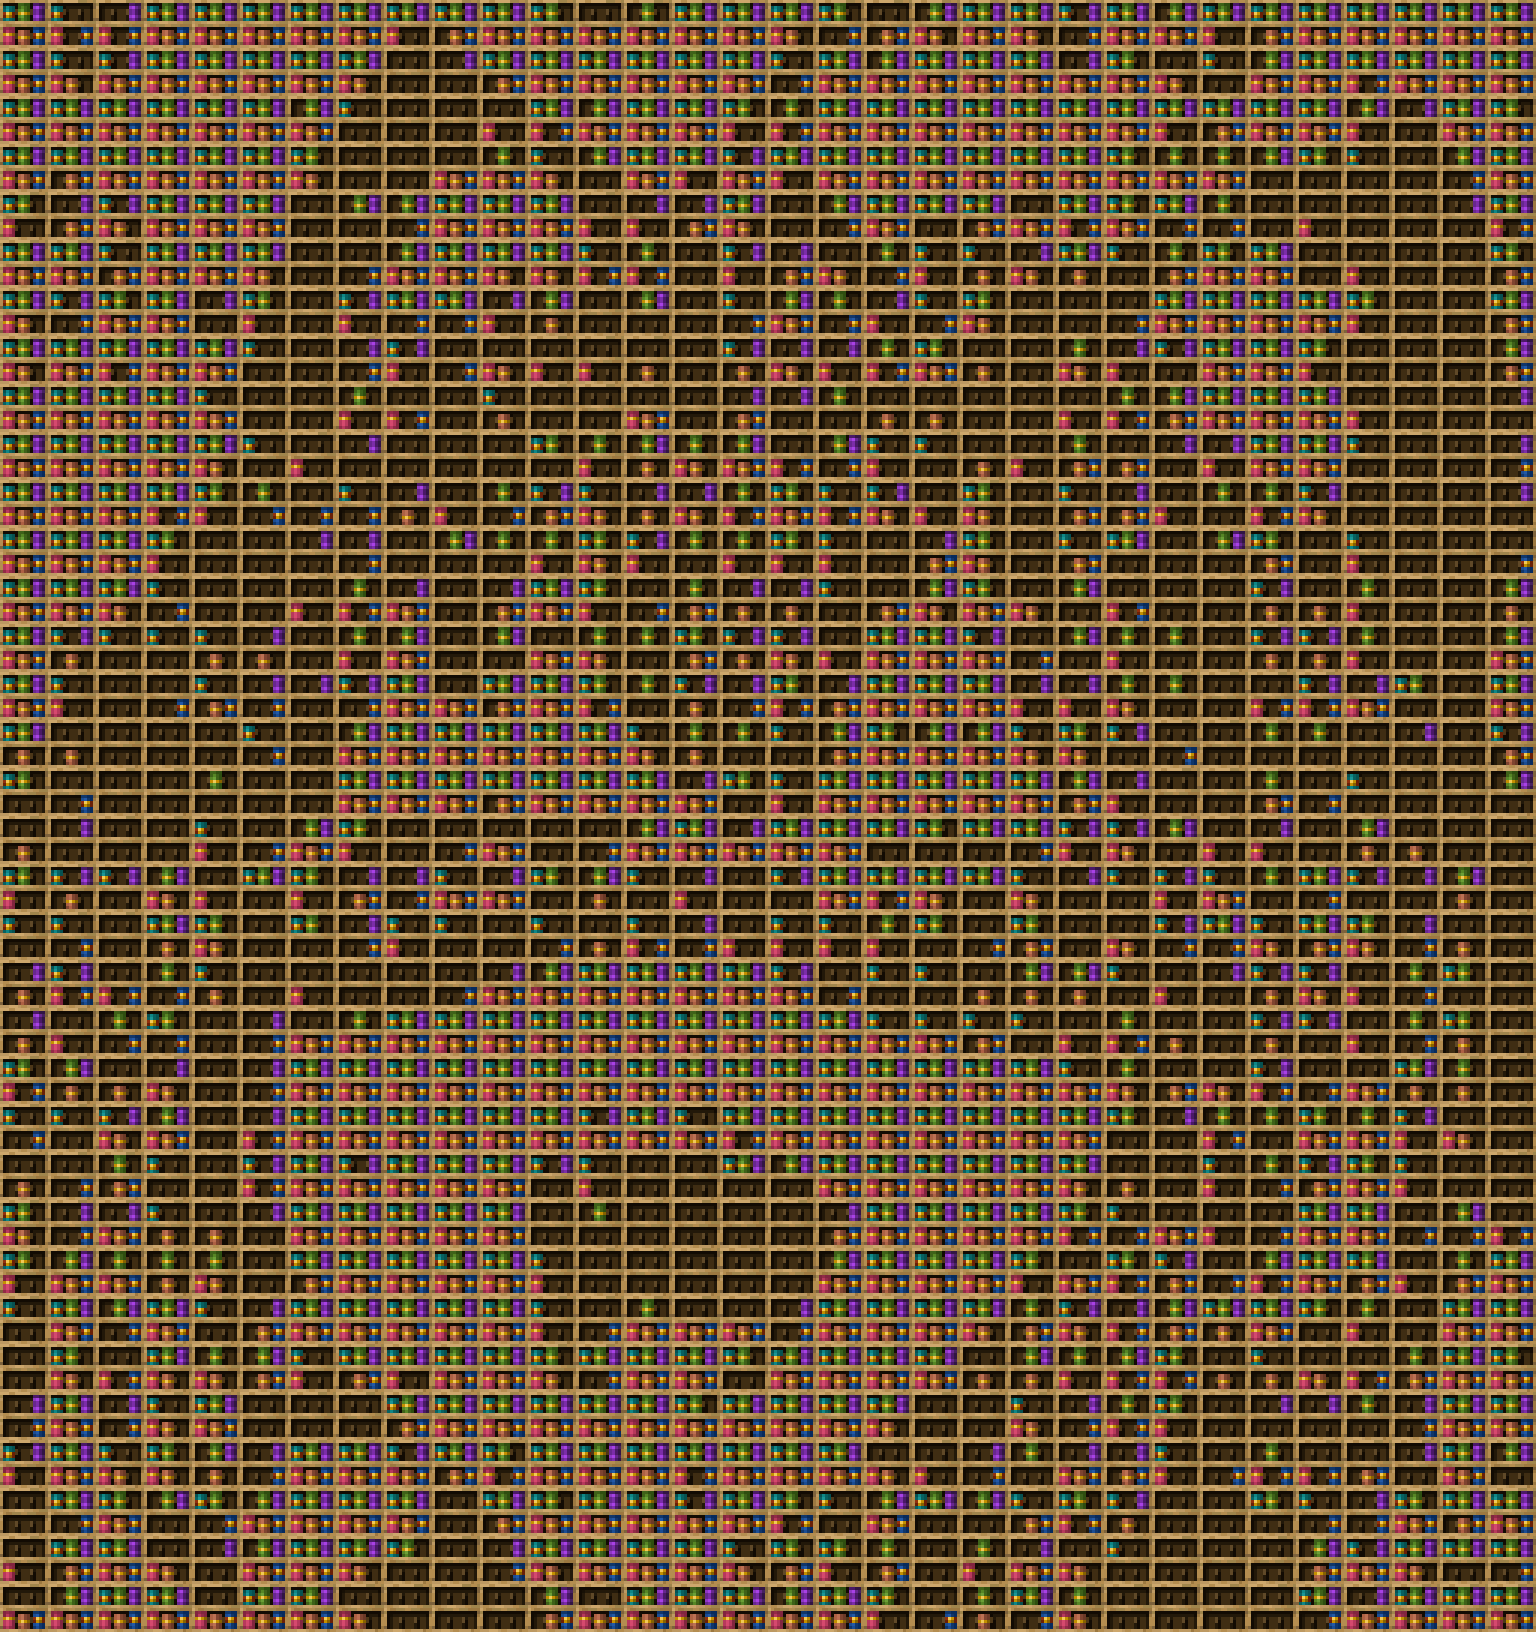 69 D chiseled bookshelf pixel art